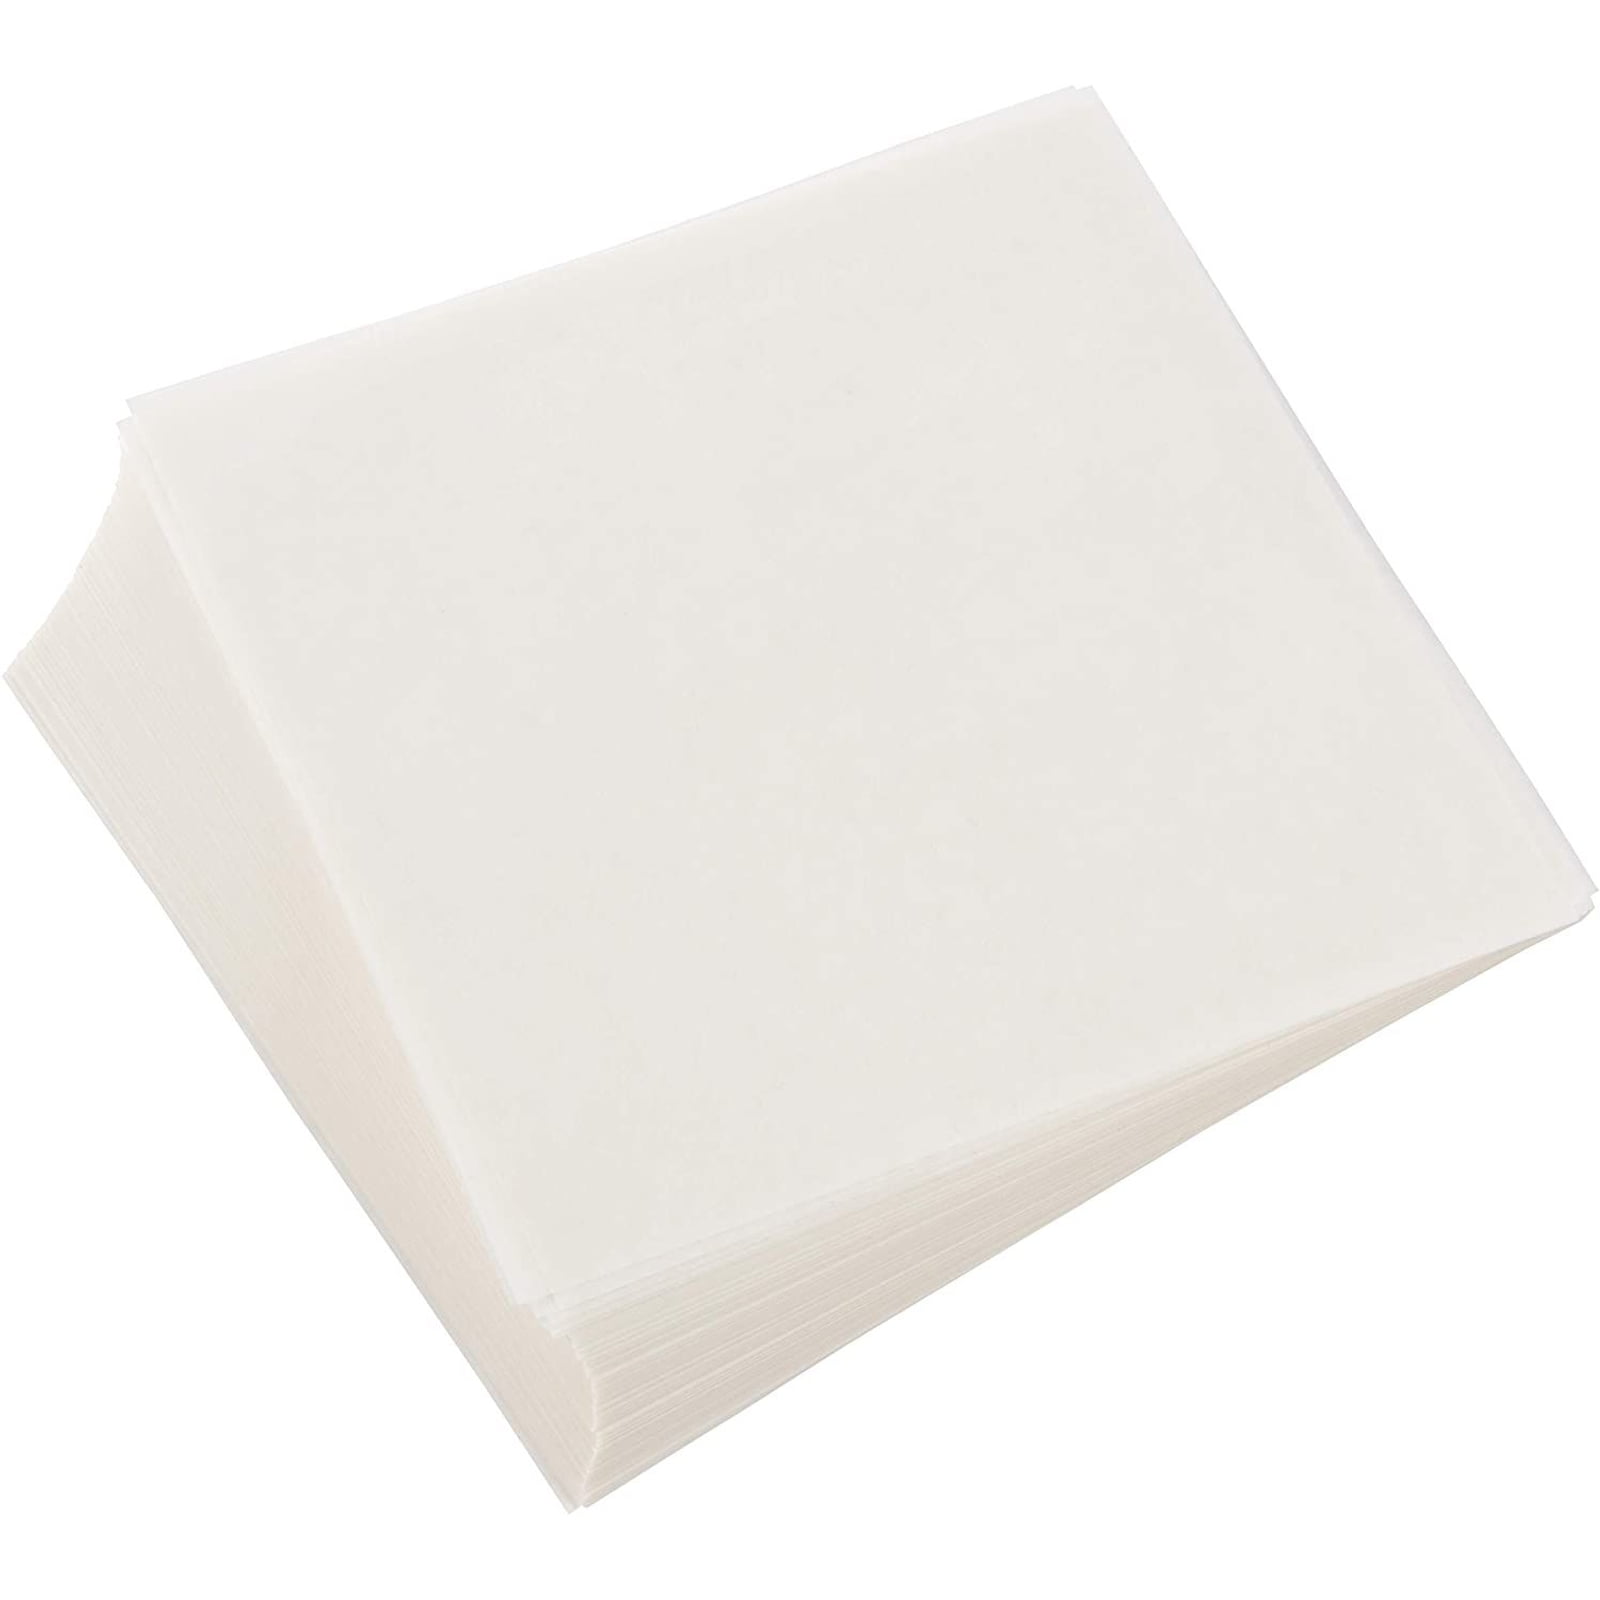 GWHOLE 500 Pack of Restaurant-Grade Non-Stick Hamburger Patty Paper Round Wax Paper 